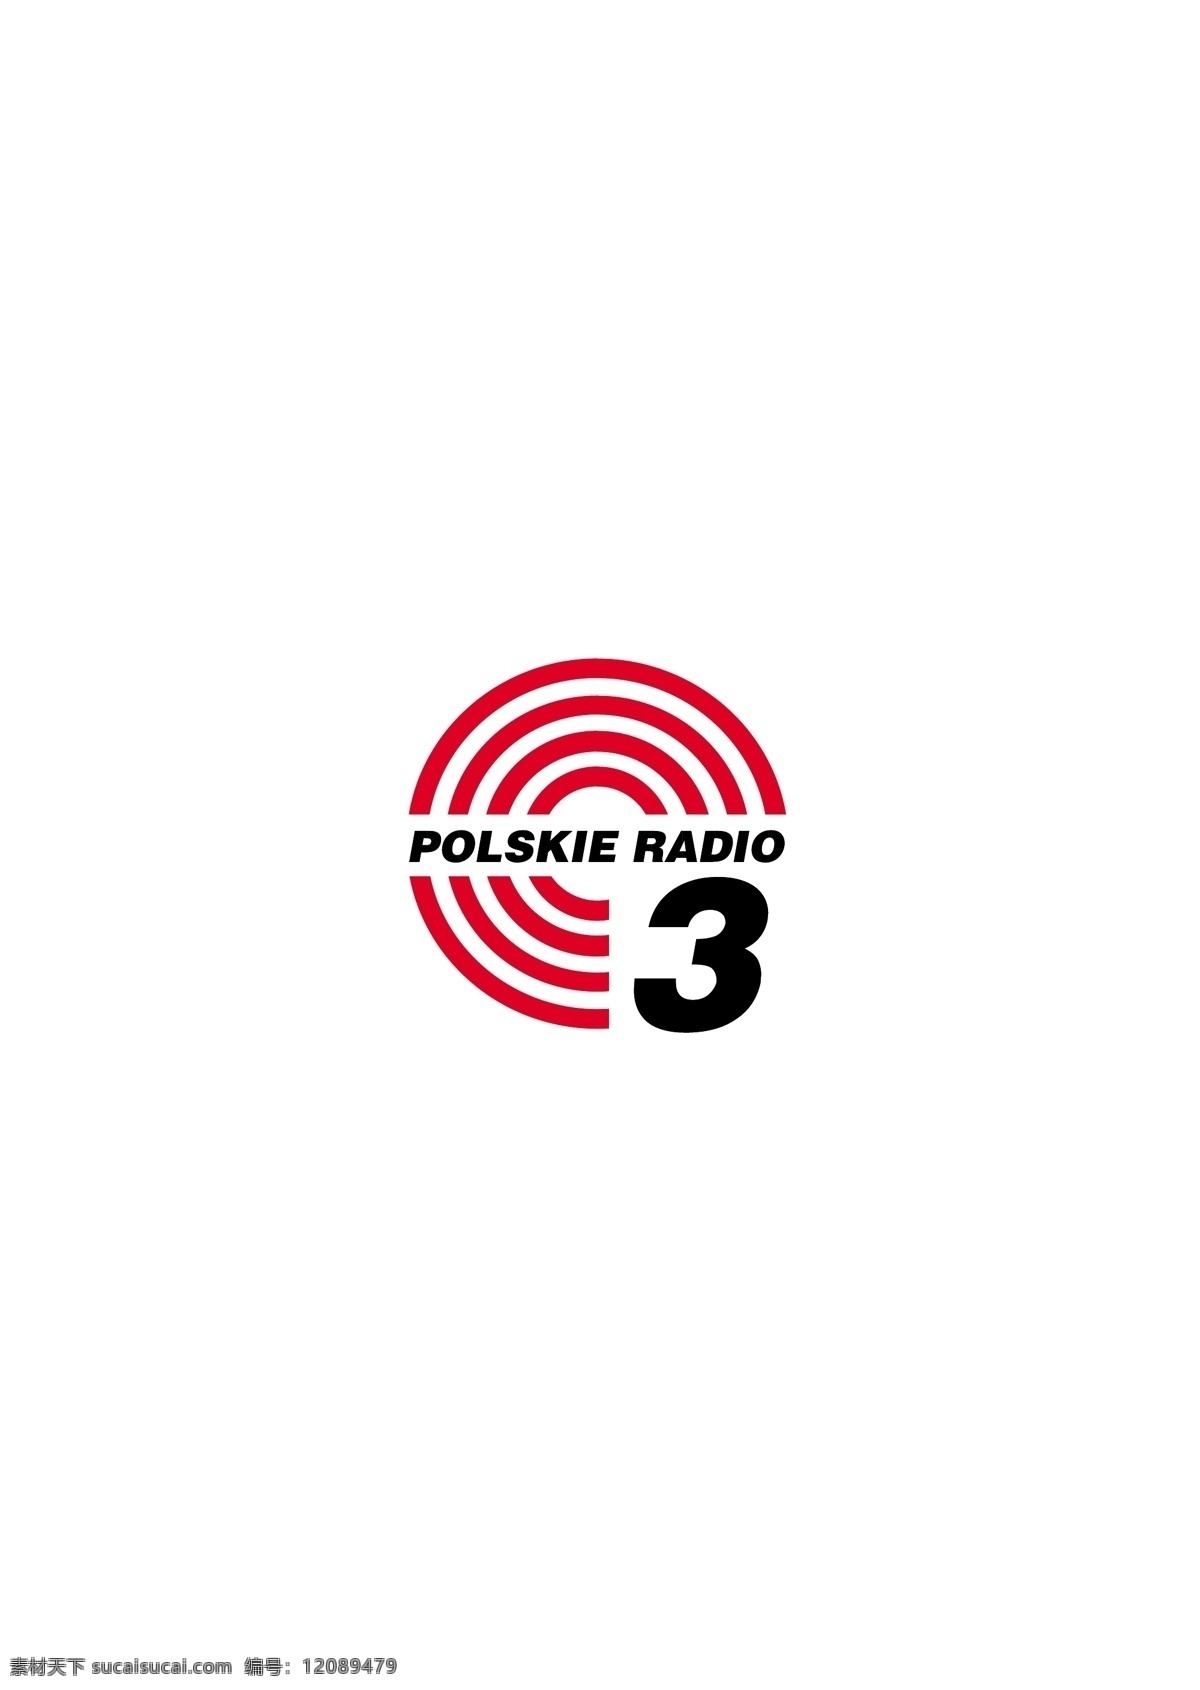 logo大全 logo 设计欣赏 商业矢量 矢量下载 polskie radio 标志设计 欣赏 网页矢量 矢量图 其他矢量图